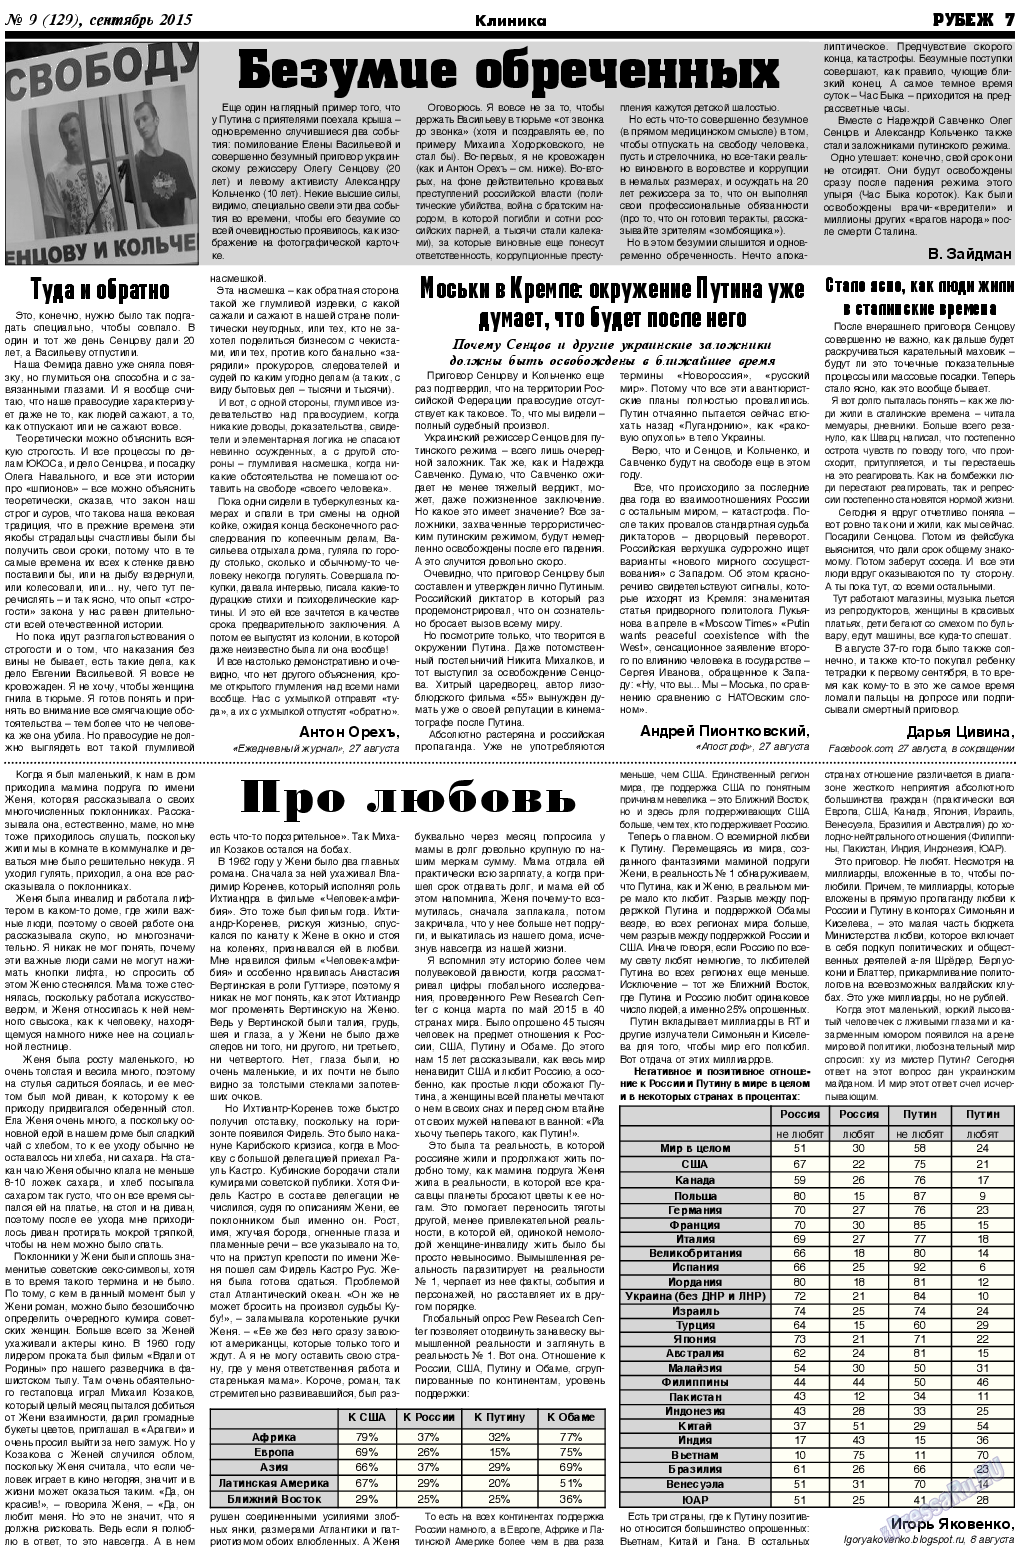 Рубеж, газета. 2015 №9 стр.7